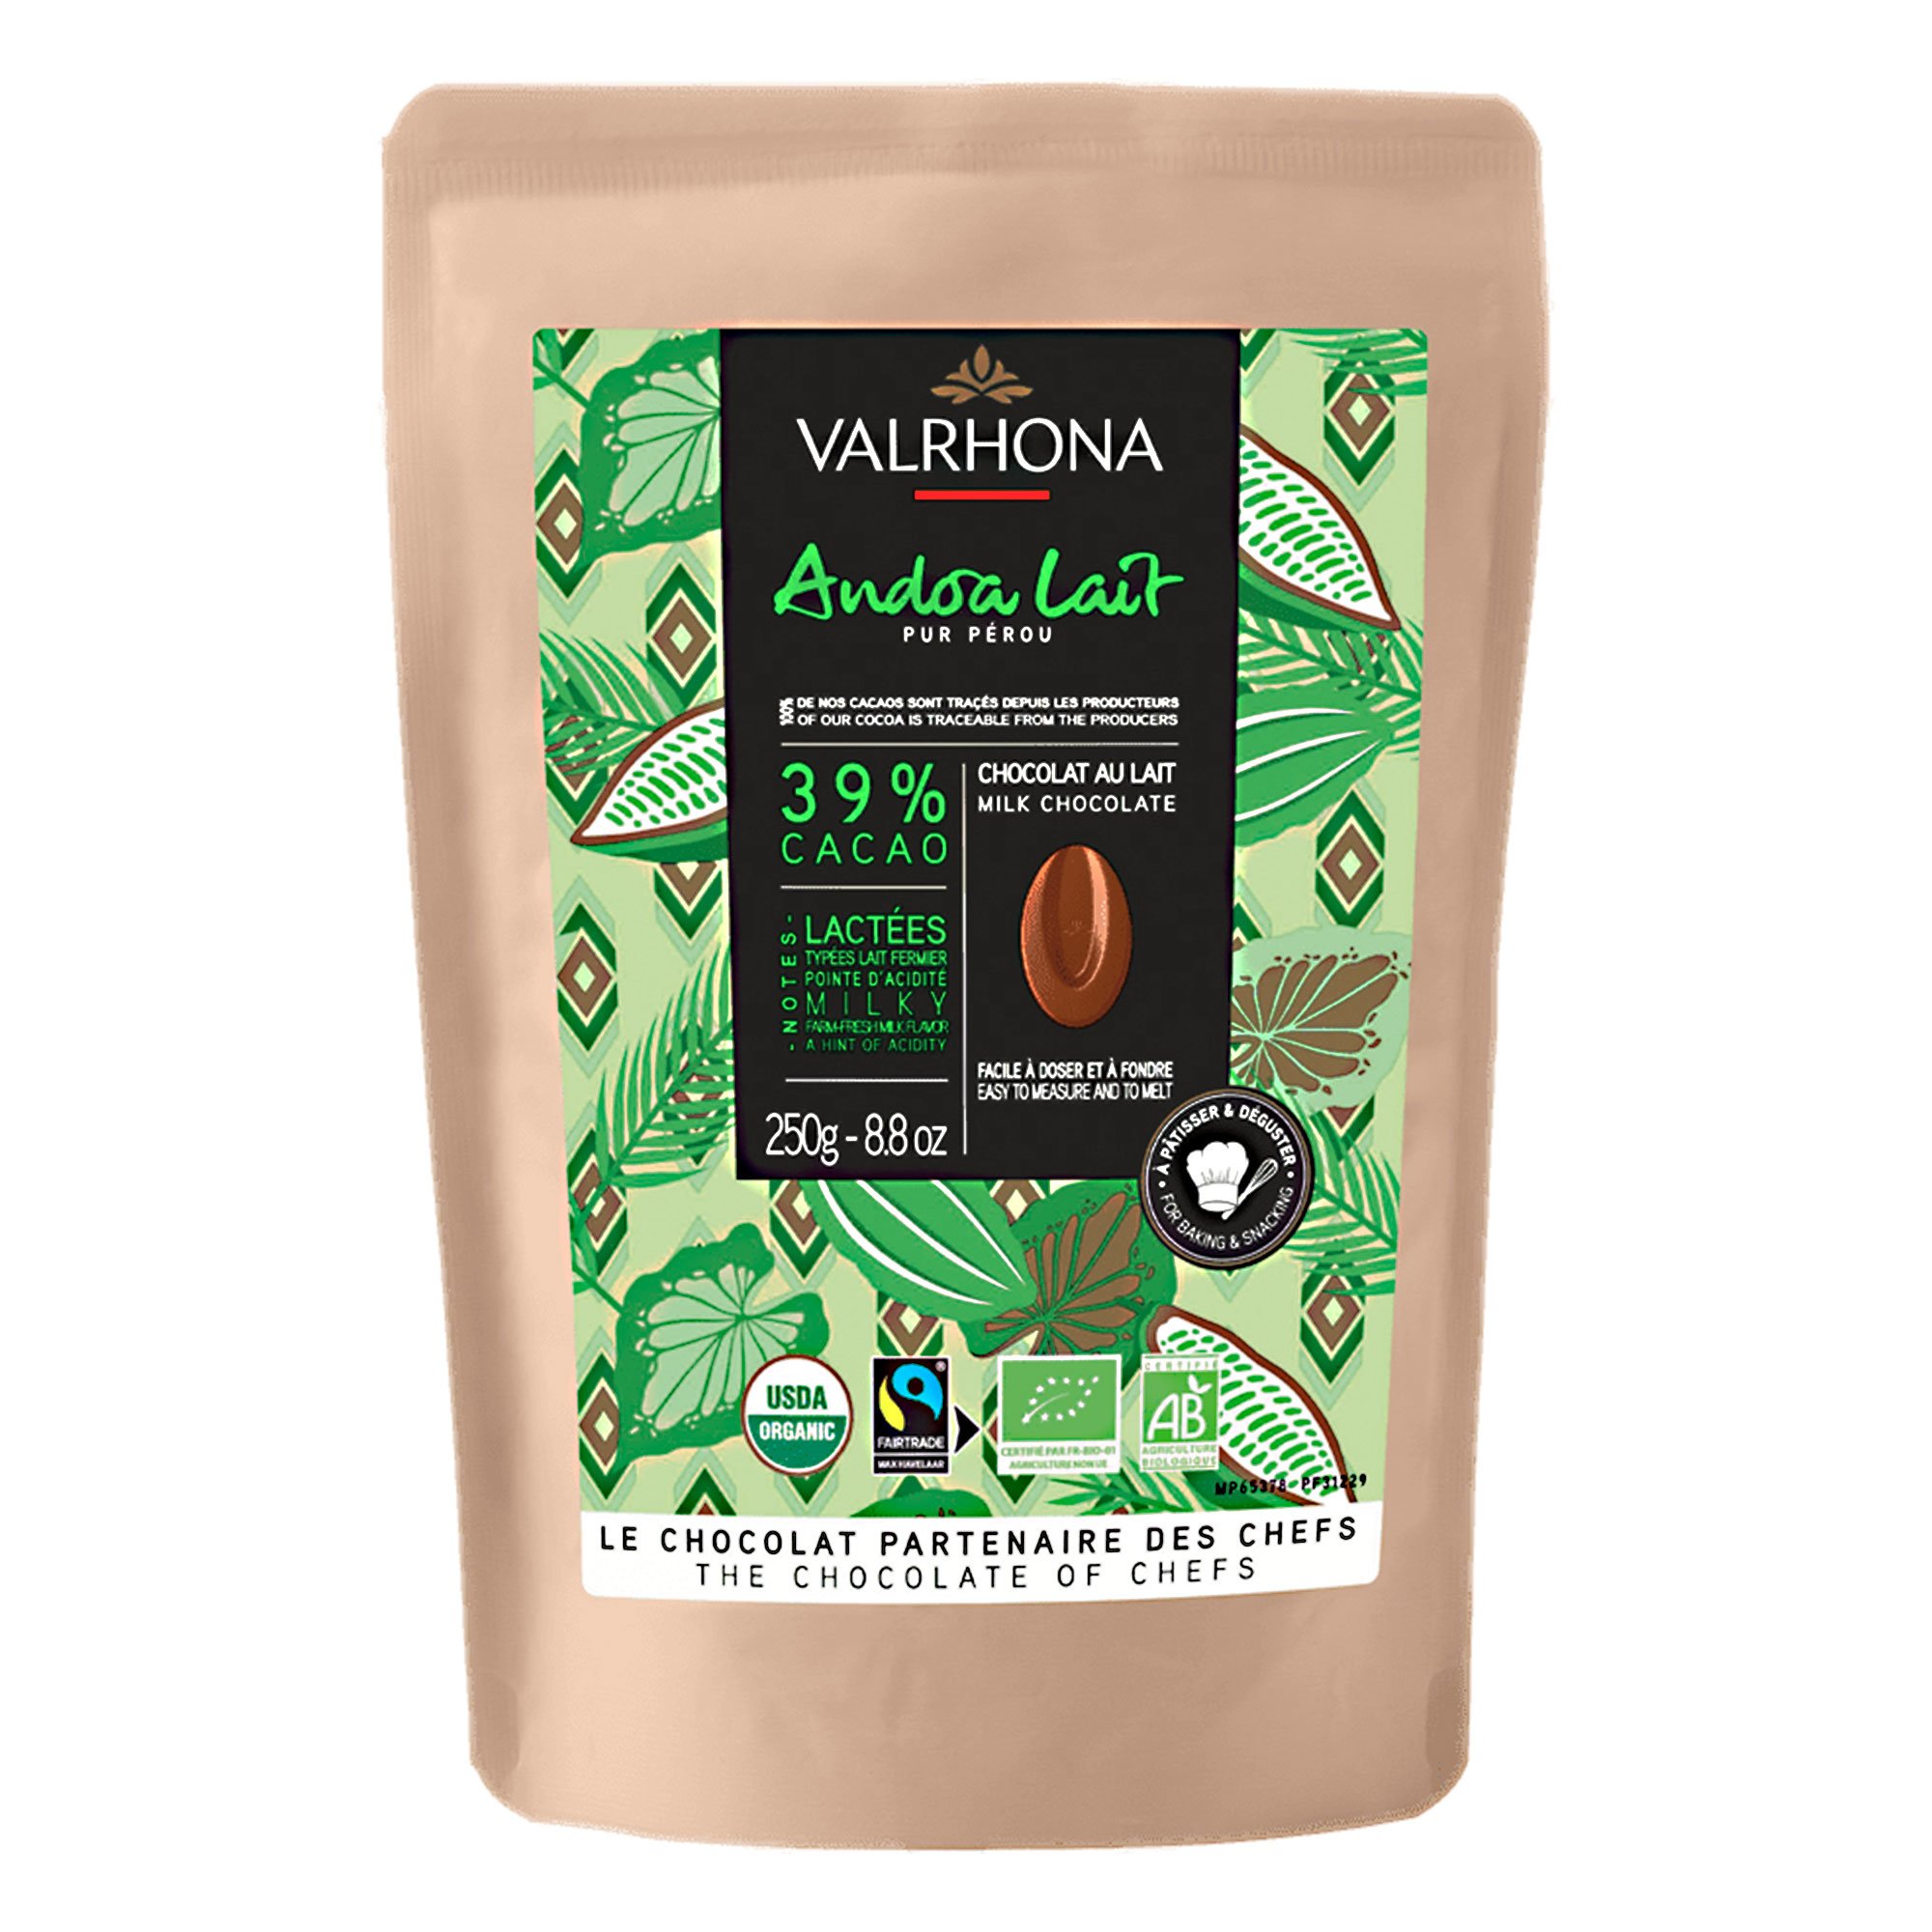 Valrhona Andoa 39% mælkechokolade, 250 g